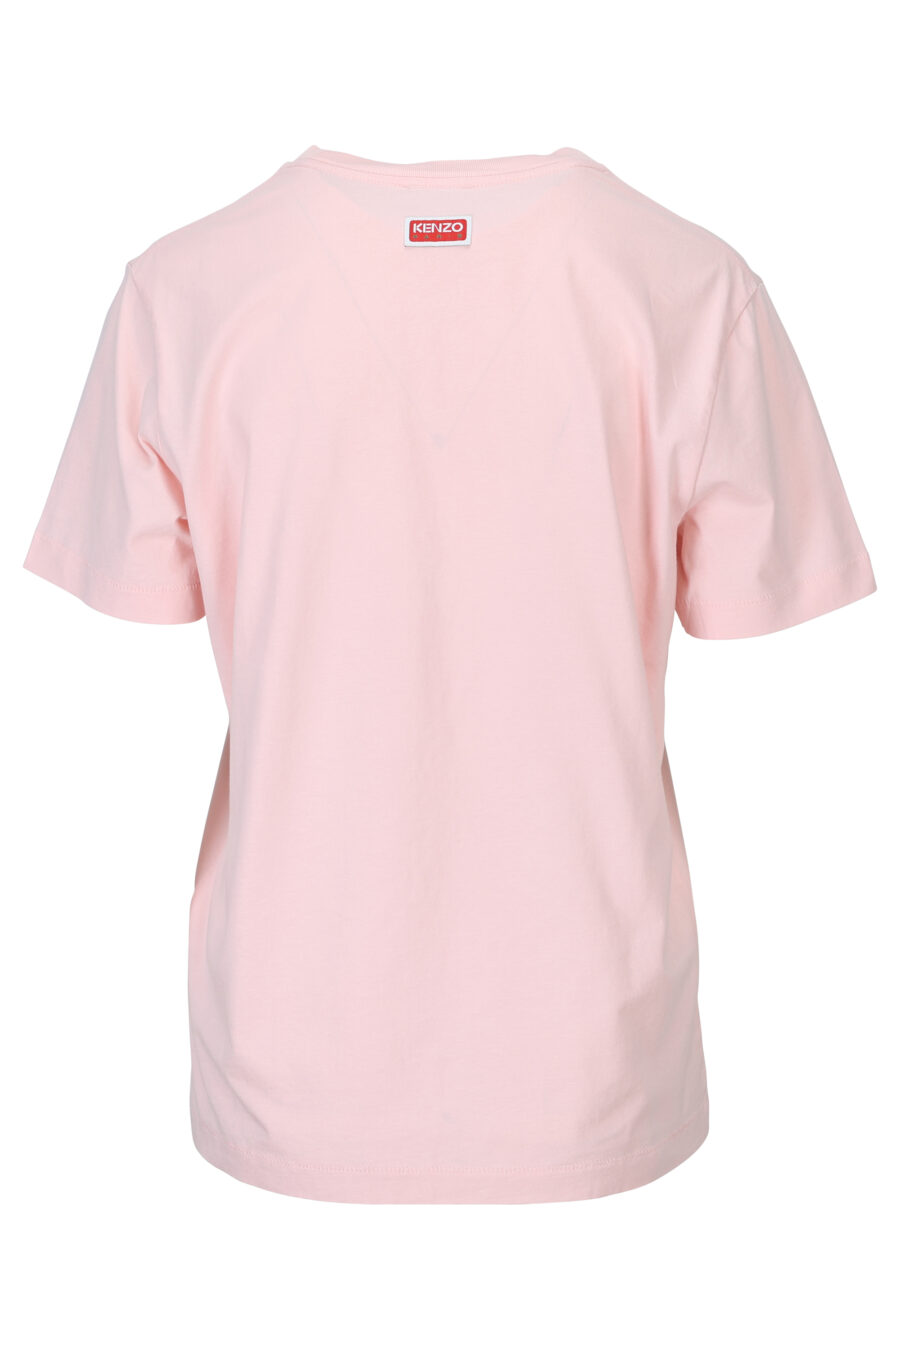 Rosa T-Shirt mit "boke flower" Maxilogo - 3612230483163 1